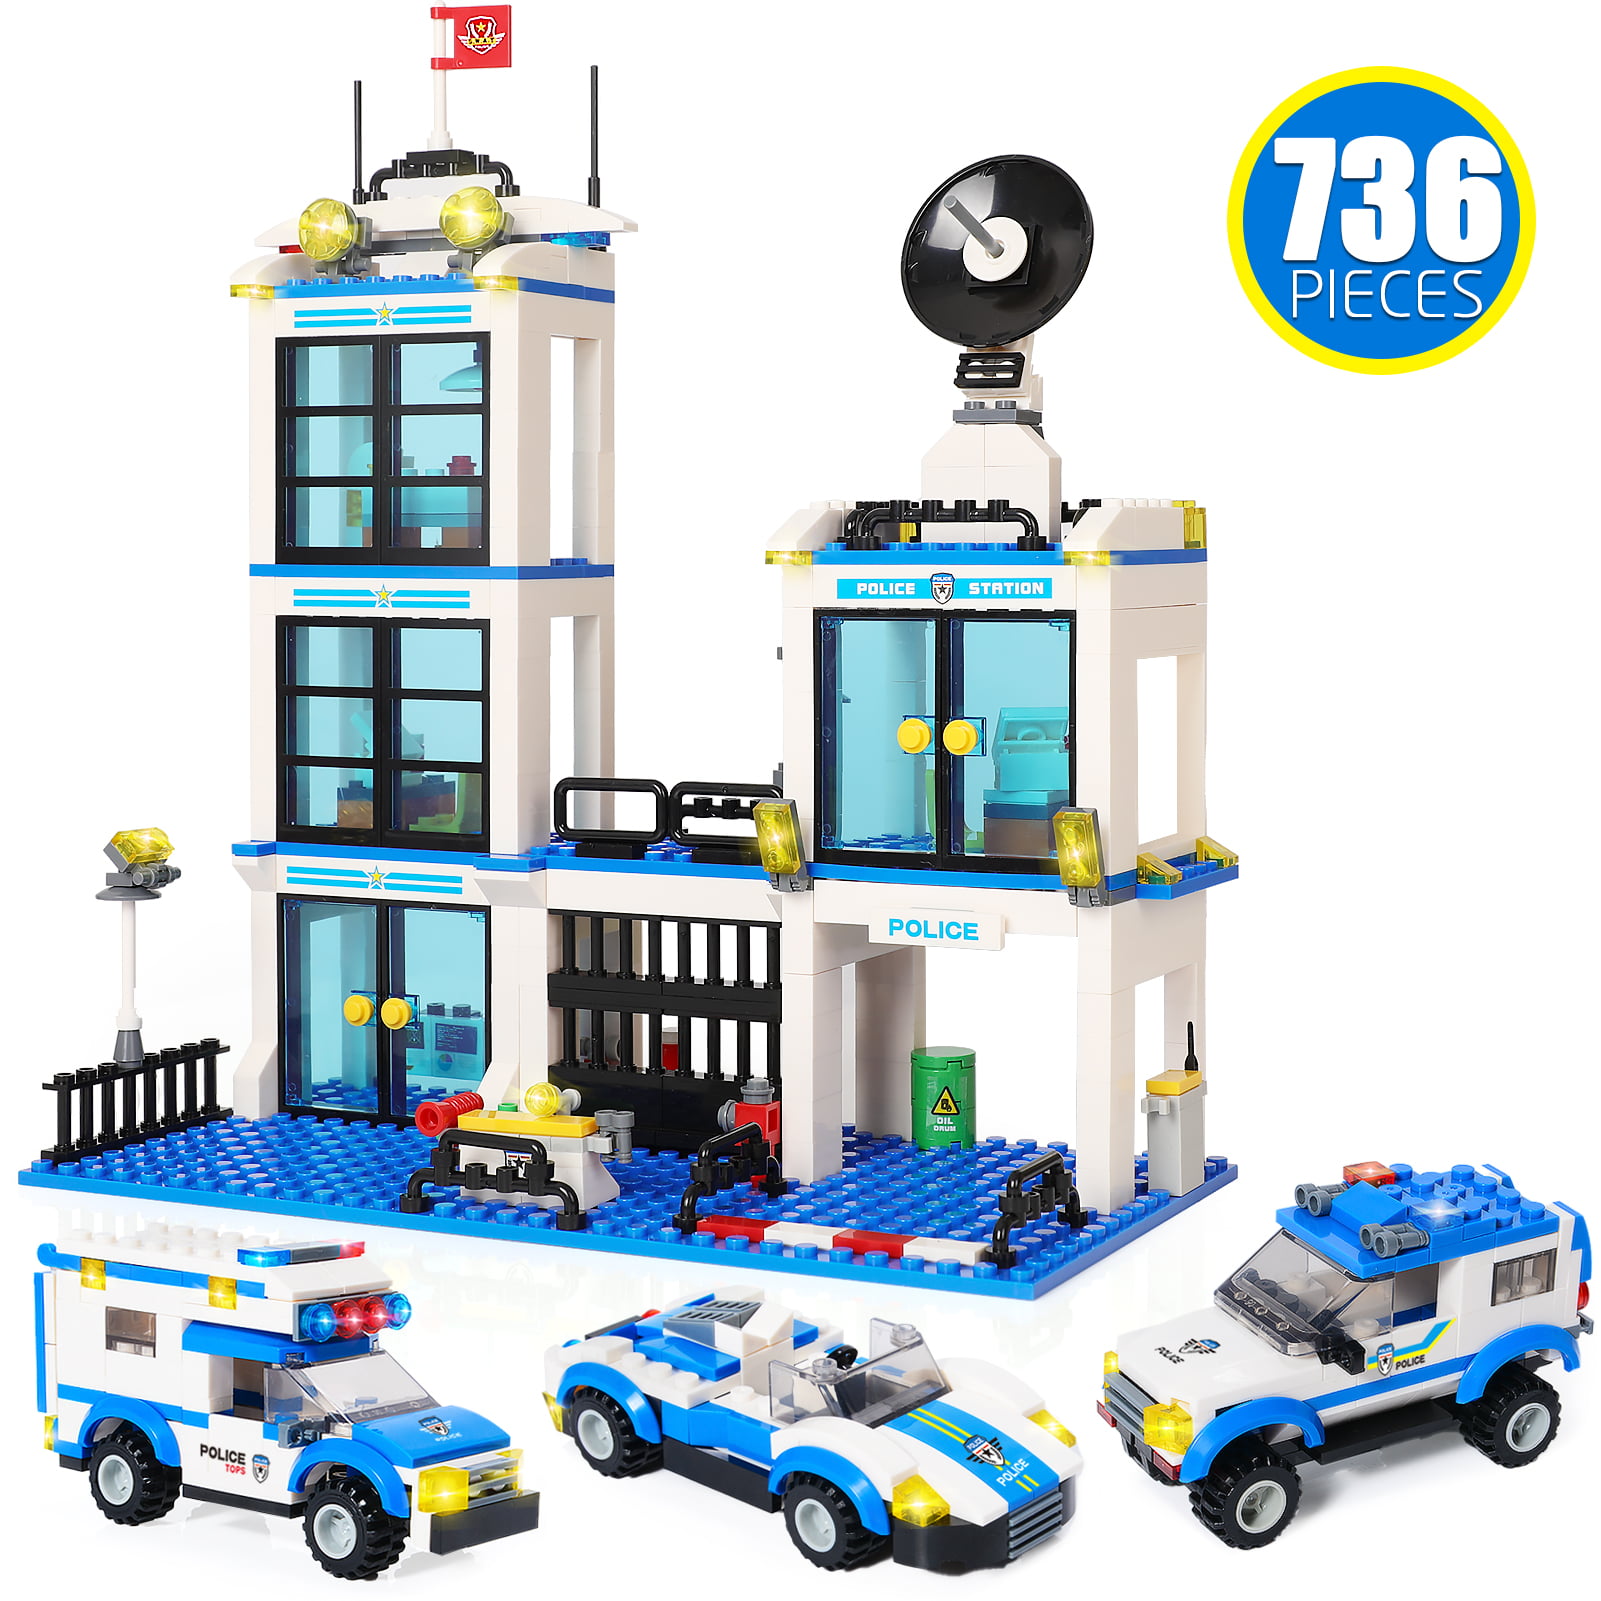 Details about   Building Blocks City Police Station Car Headquarters Bricks Toys for Children Ki 